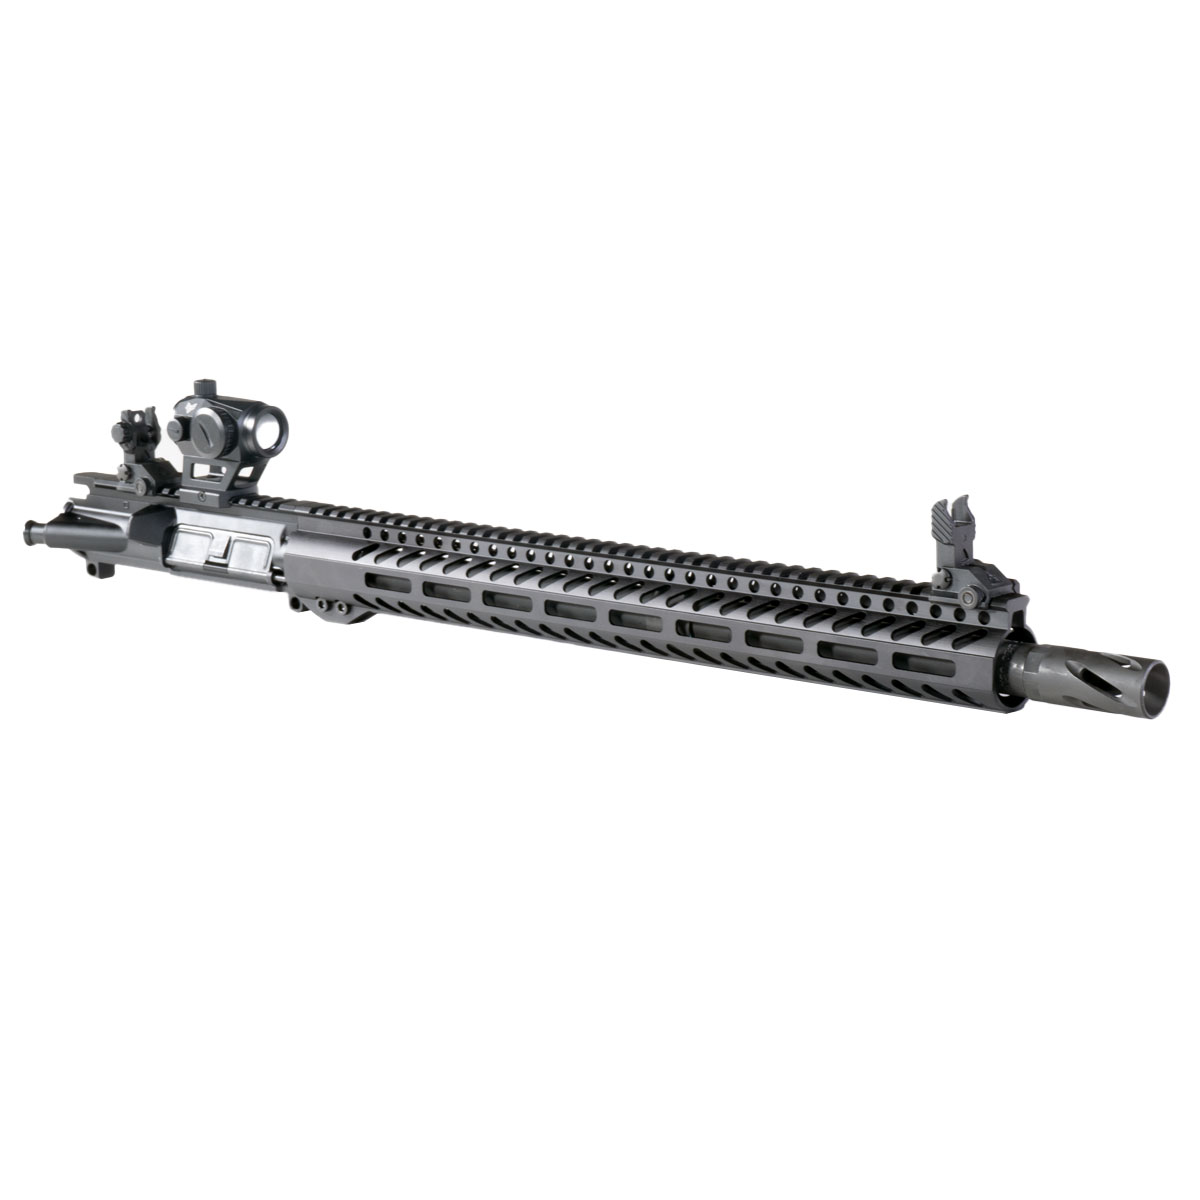 DTT 'Lead Farmer' 18-inch AR-15 12.7x42 (.50 BW) Manganese Phosphate Rifle Upper Build Kit